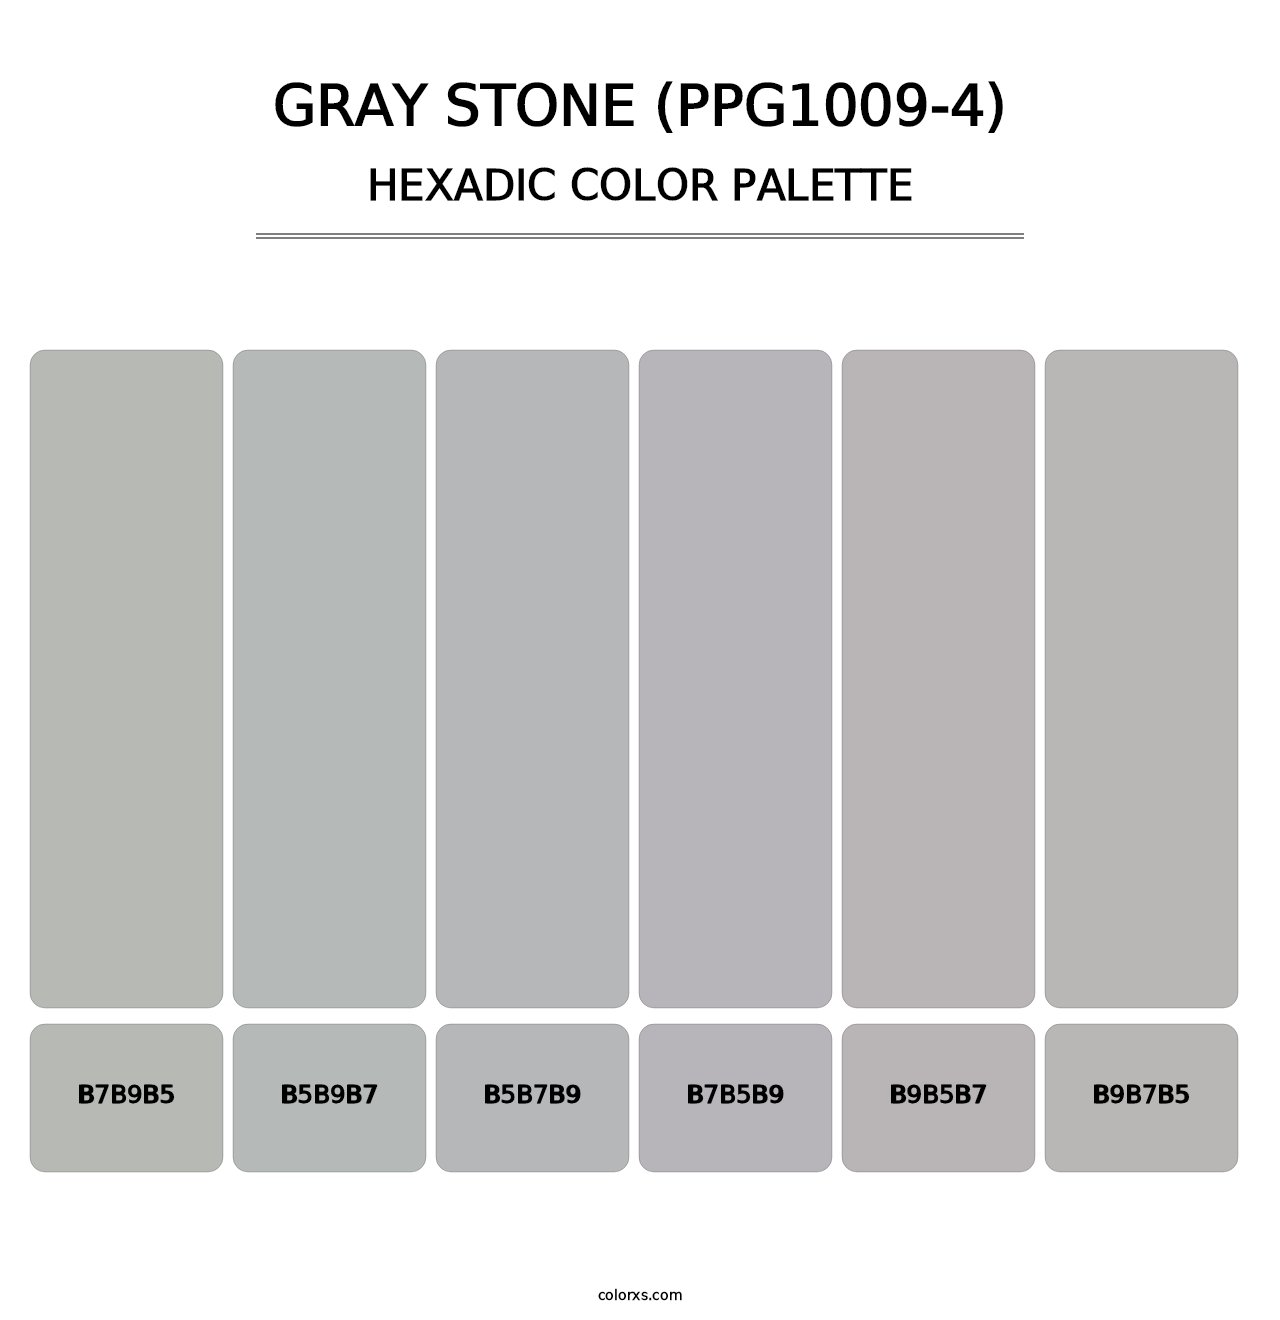 Gray Stone (PPG1009-4) - Hexadic Color Palette